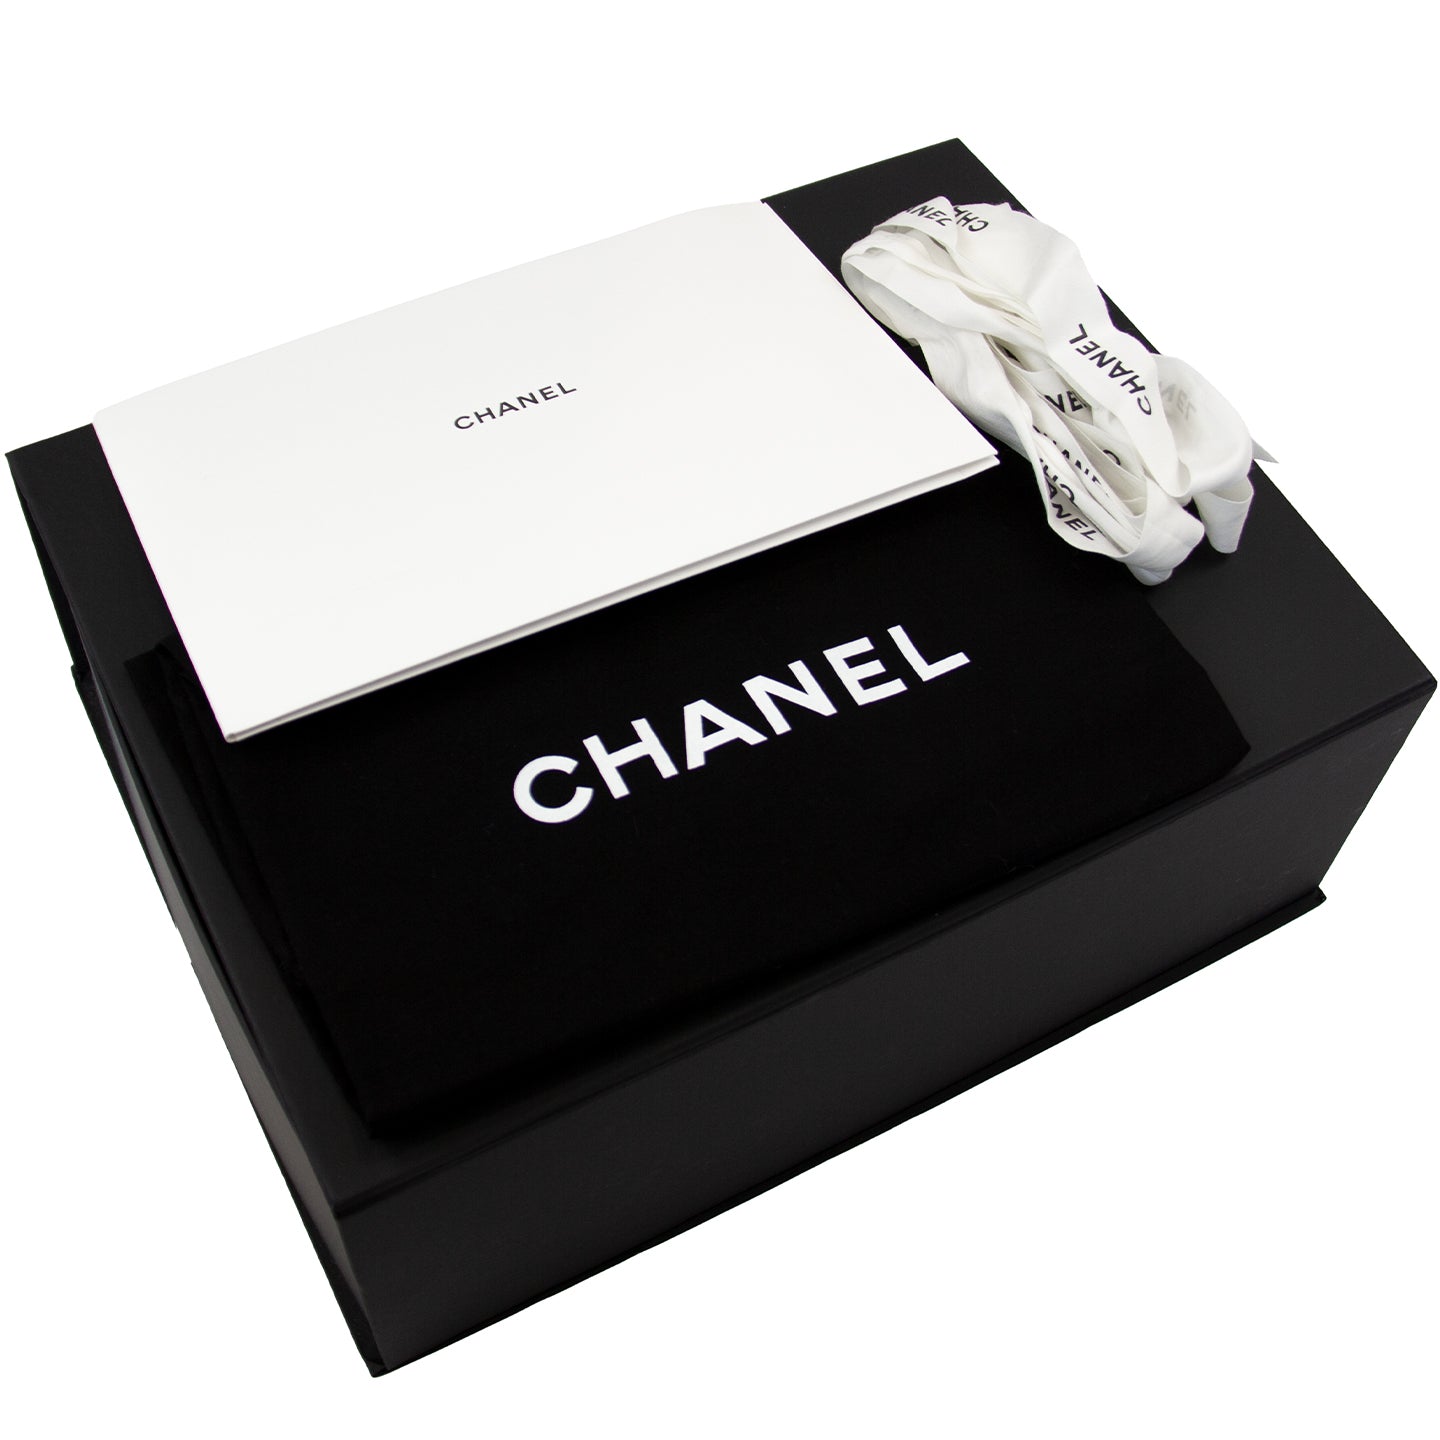 Chanel vibes without the Chanel price tag #tweedset #tweedblazer #tweedtop # chanel #brunchfit